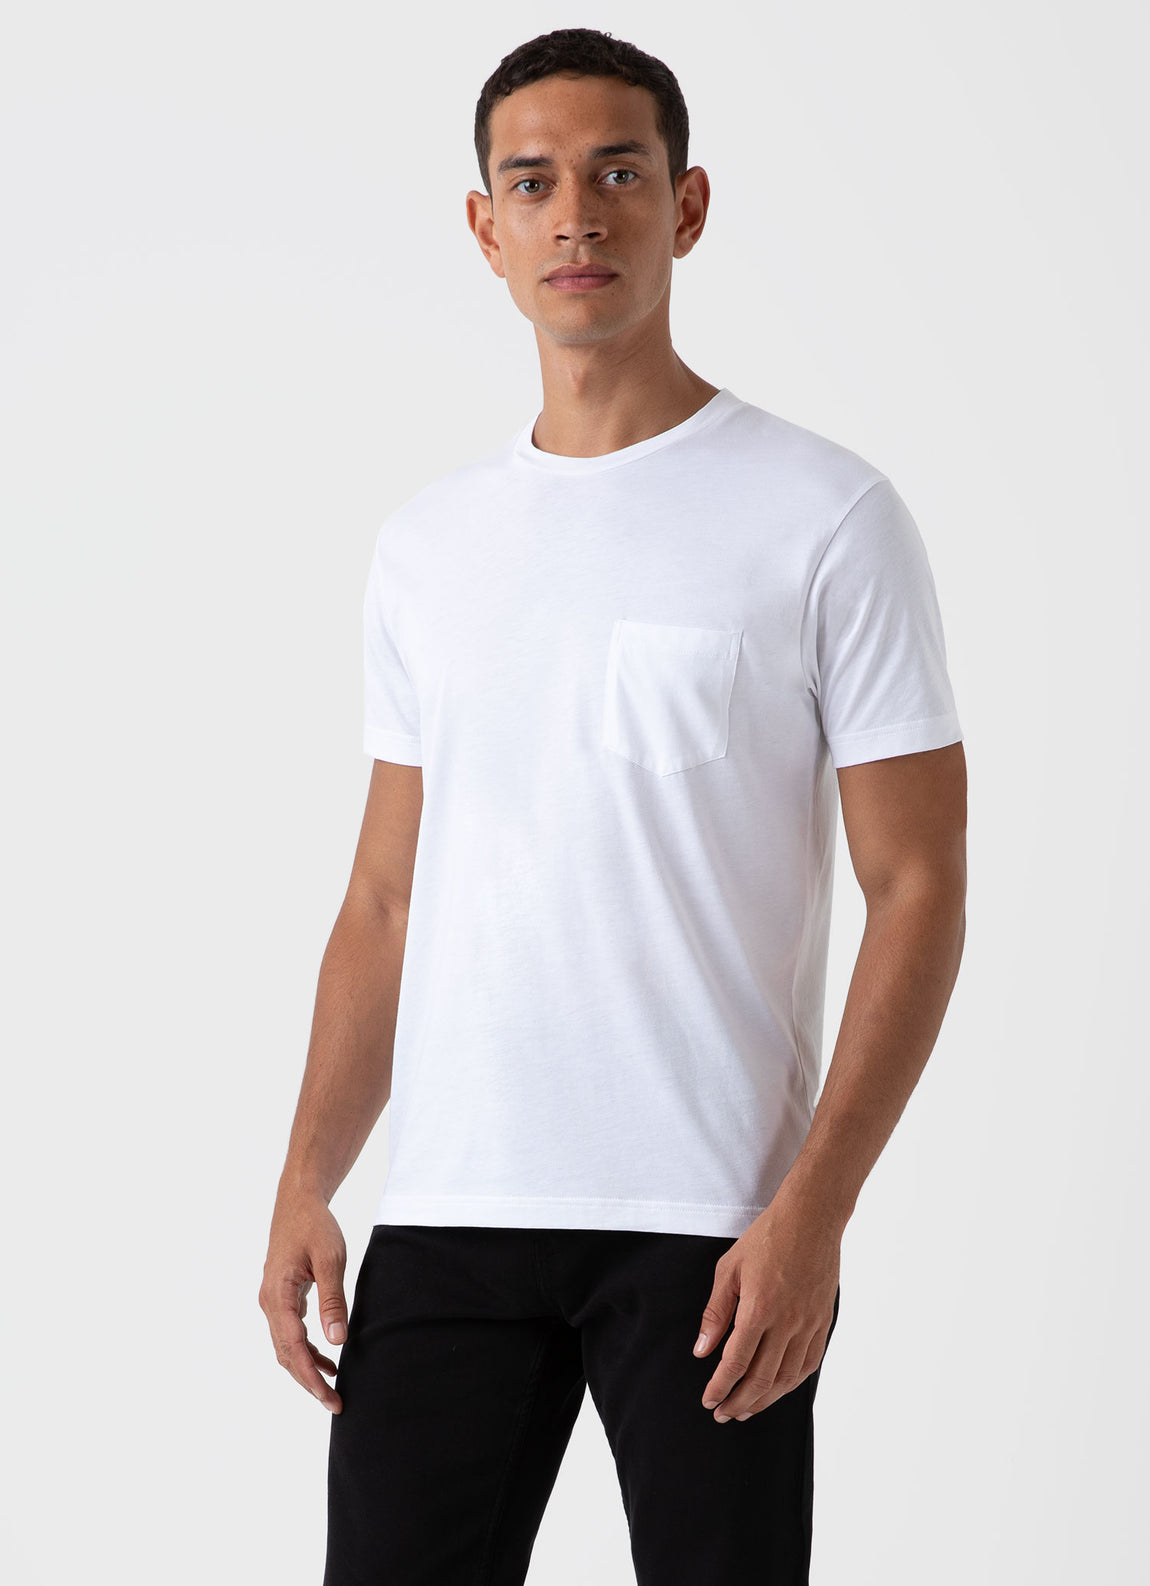 Men's Riviera Midweight Pocket T-shirt in White | Sunspel